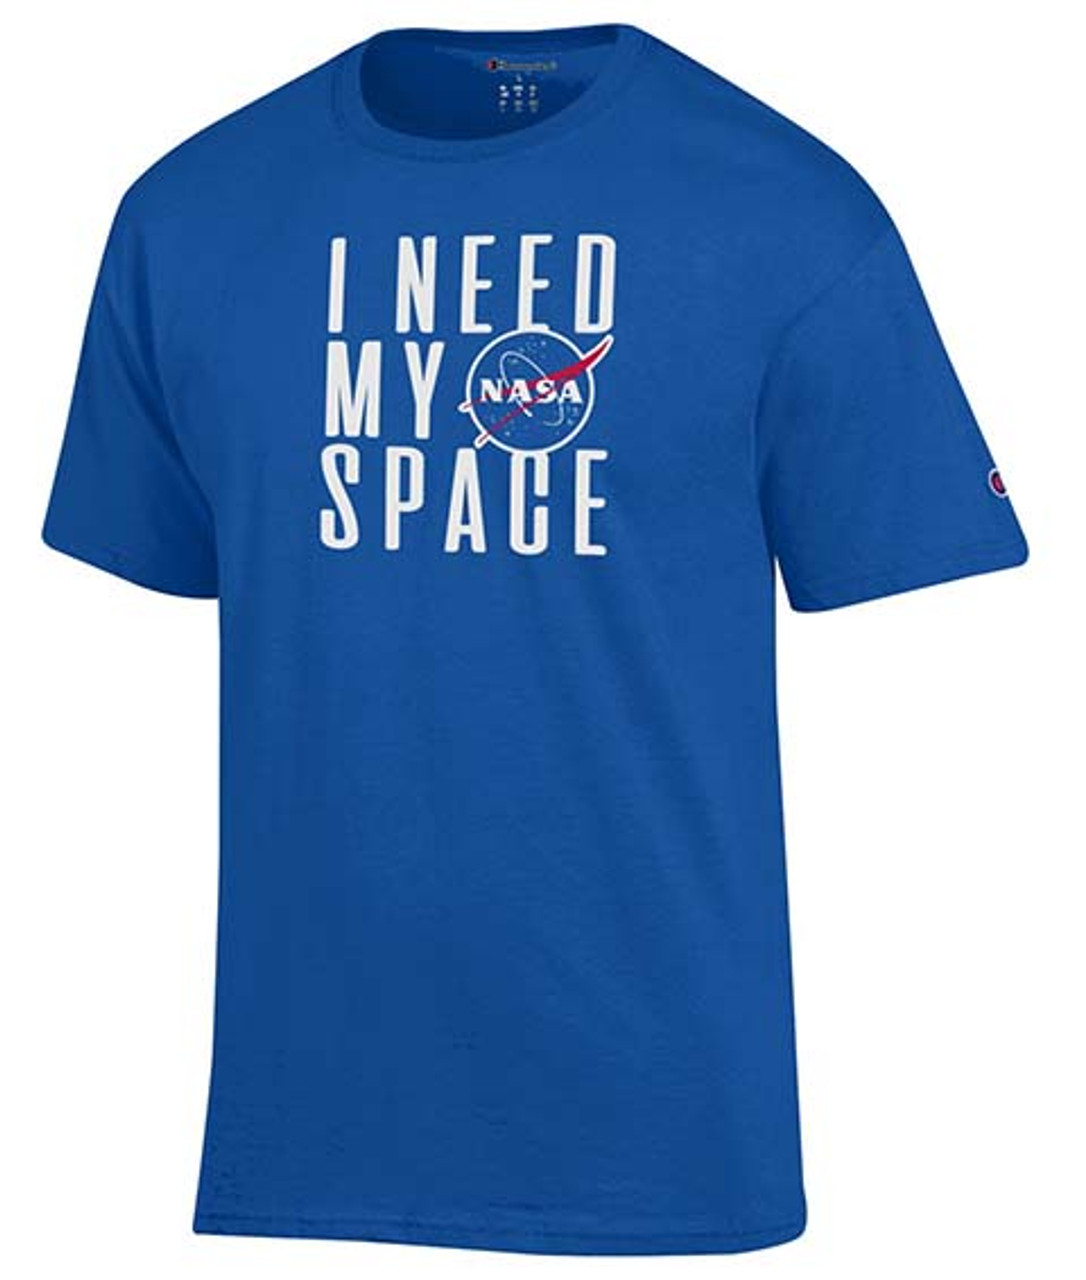 'I Need My Space' Tee - Royal Blue